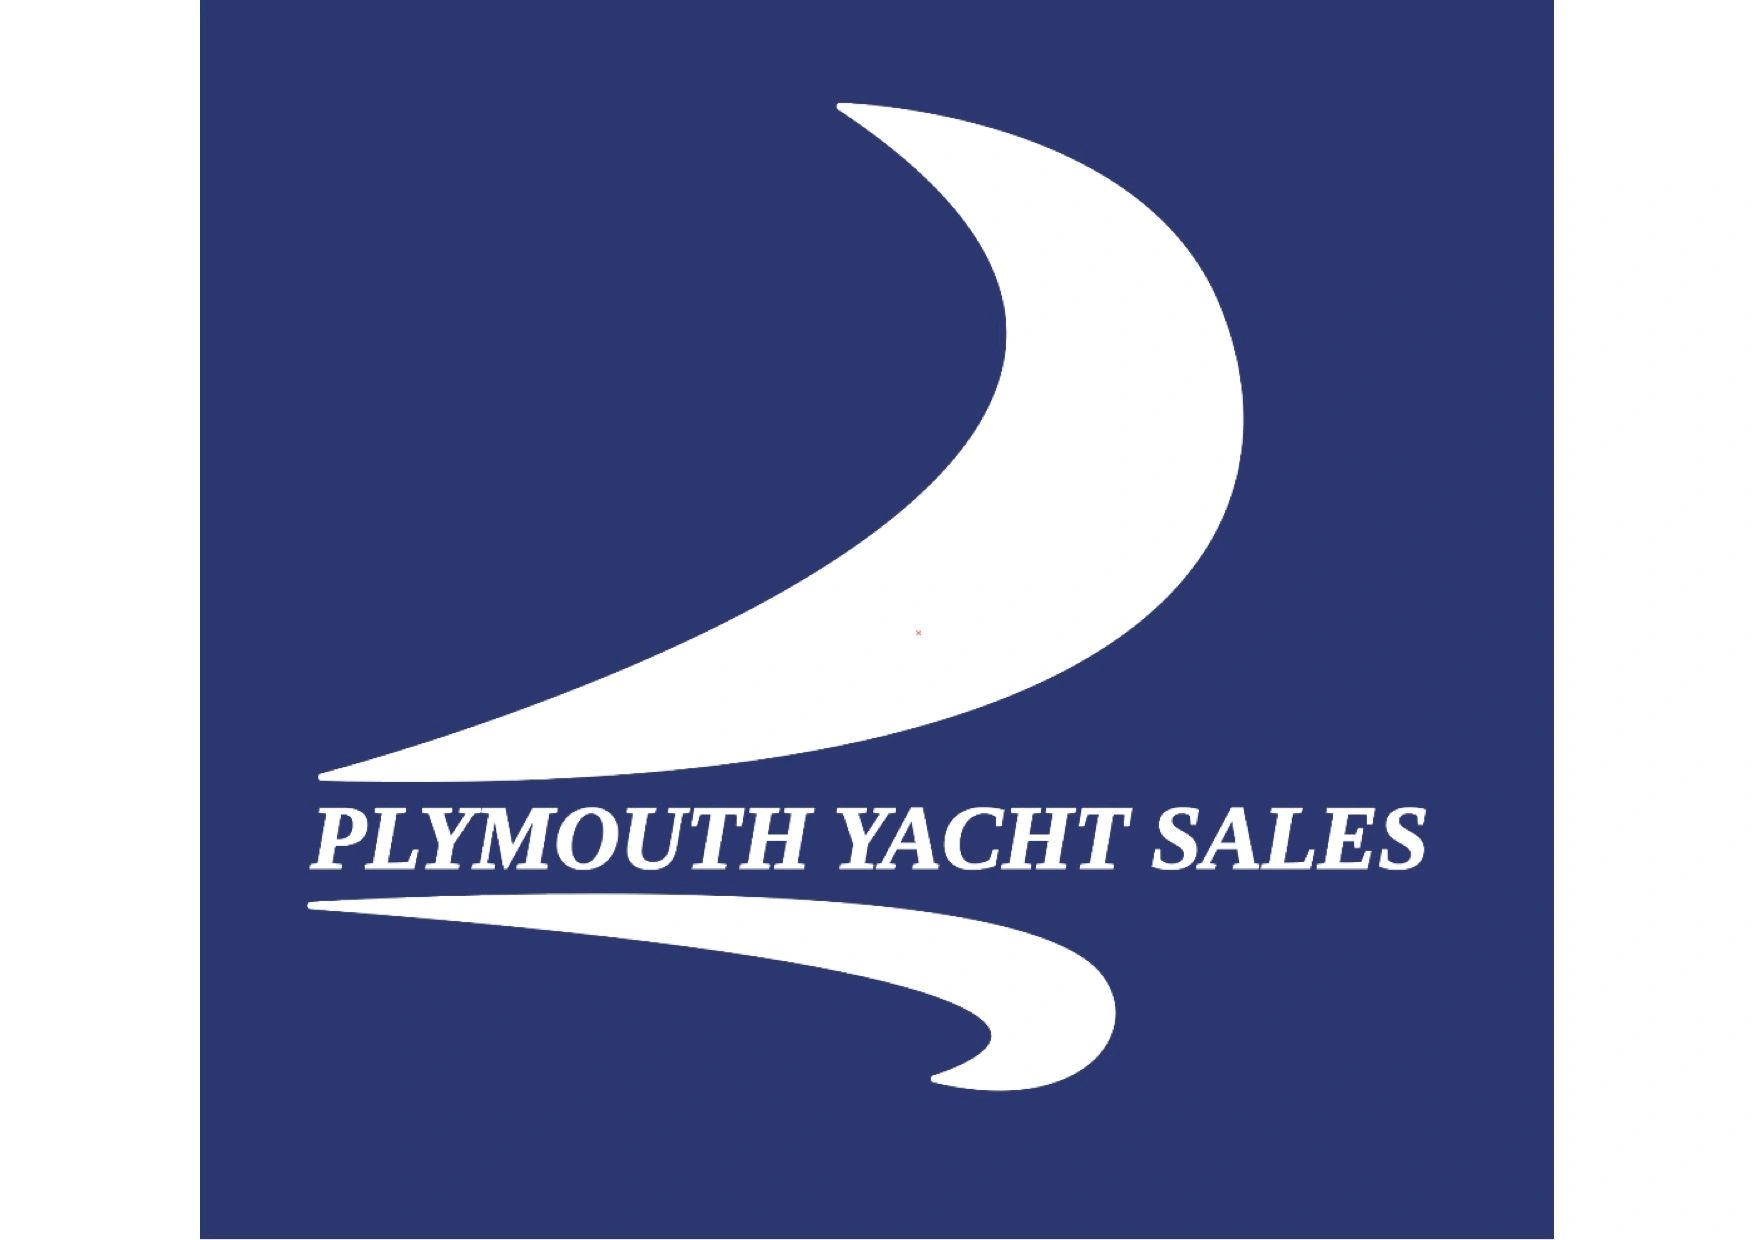 ocean yacht sales plymouth